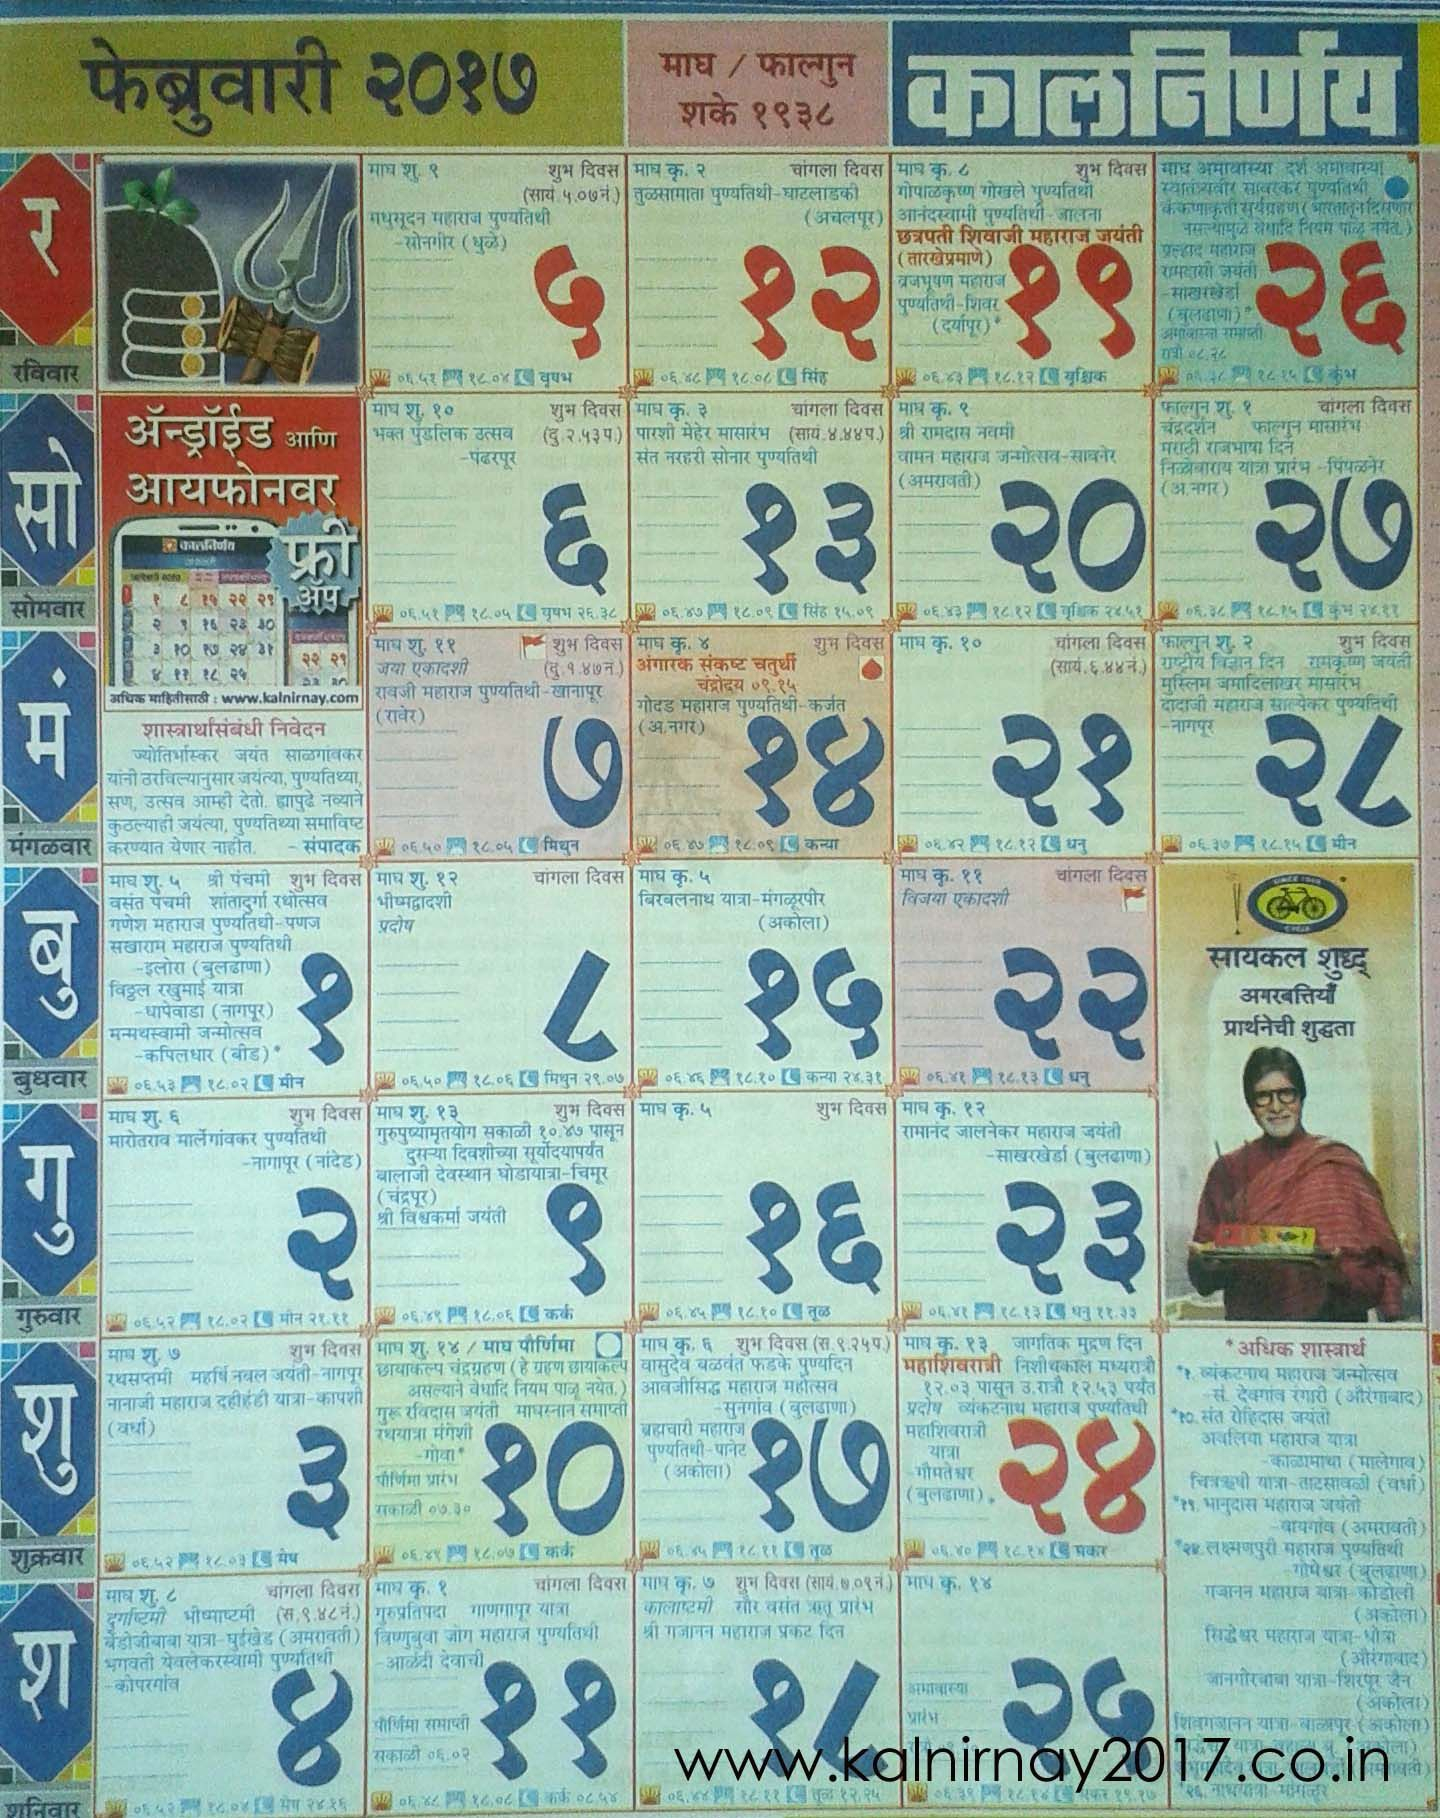 20+ Kalnirnay Calendar Calendar 2021 Marathi - Free